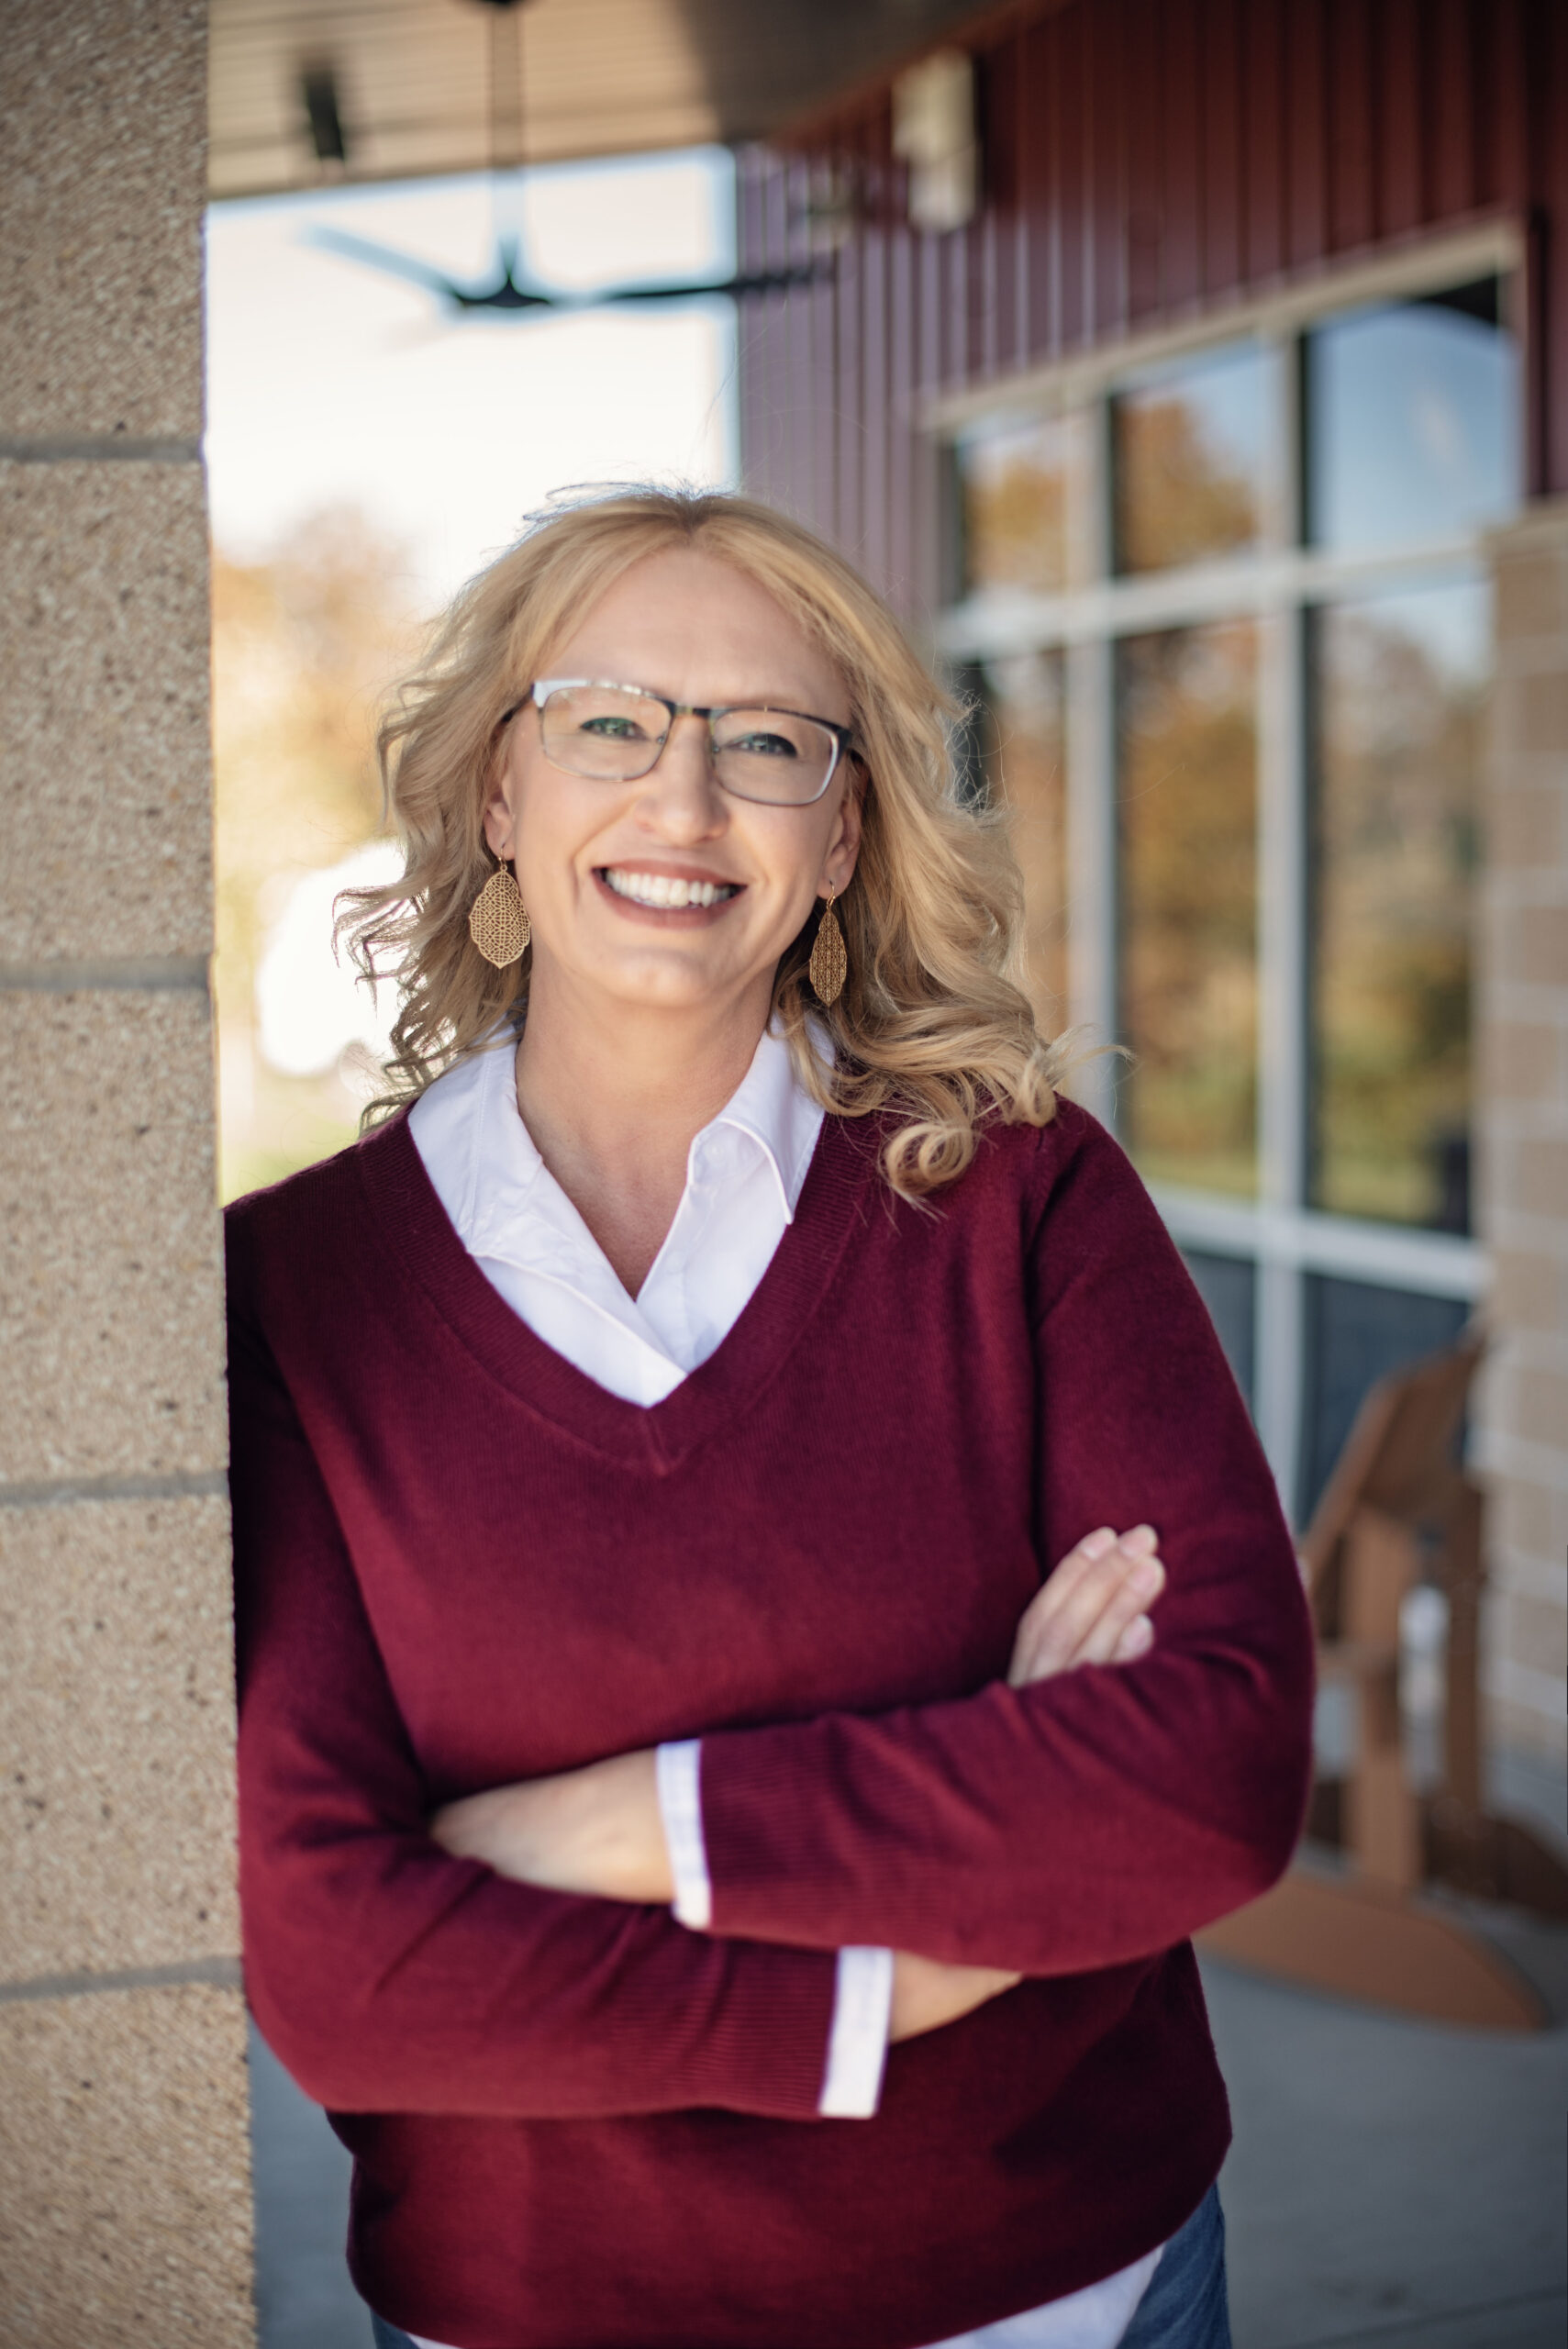 Press Release: Pro-life advocate Becky Laubinger announces bid for Missouri House – The Missouri Times